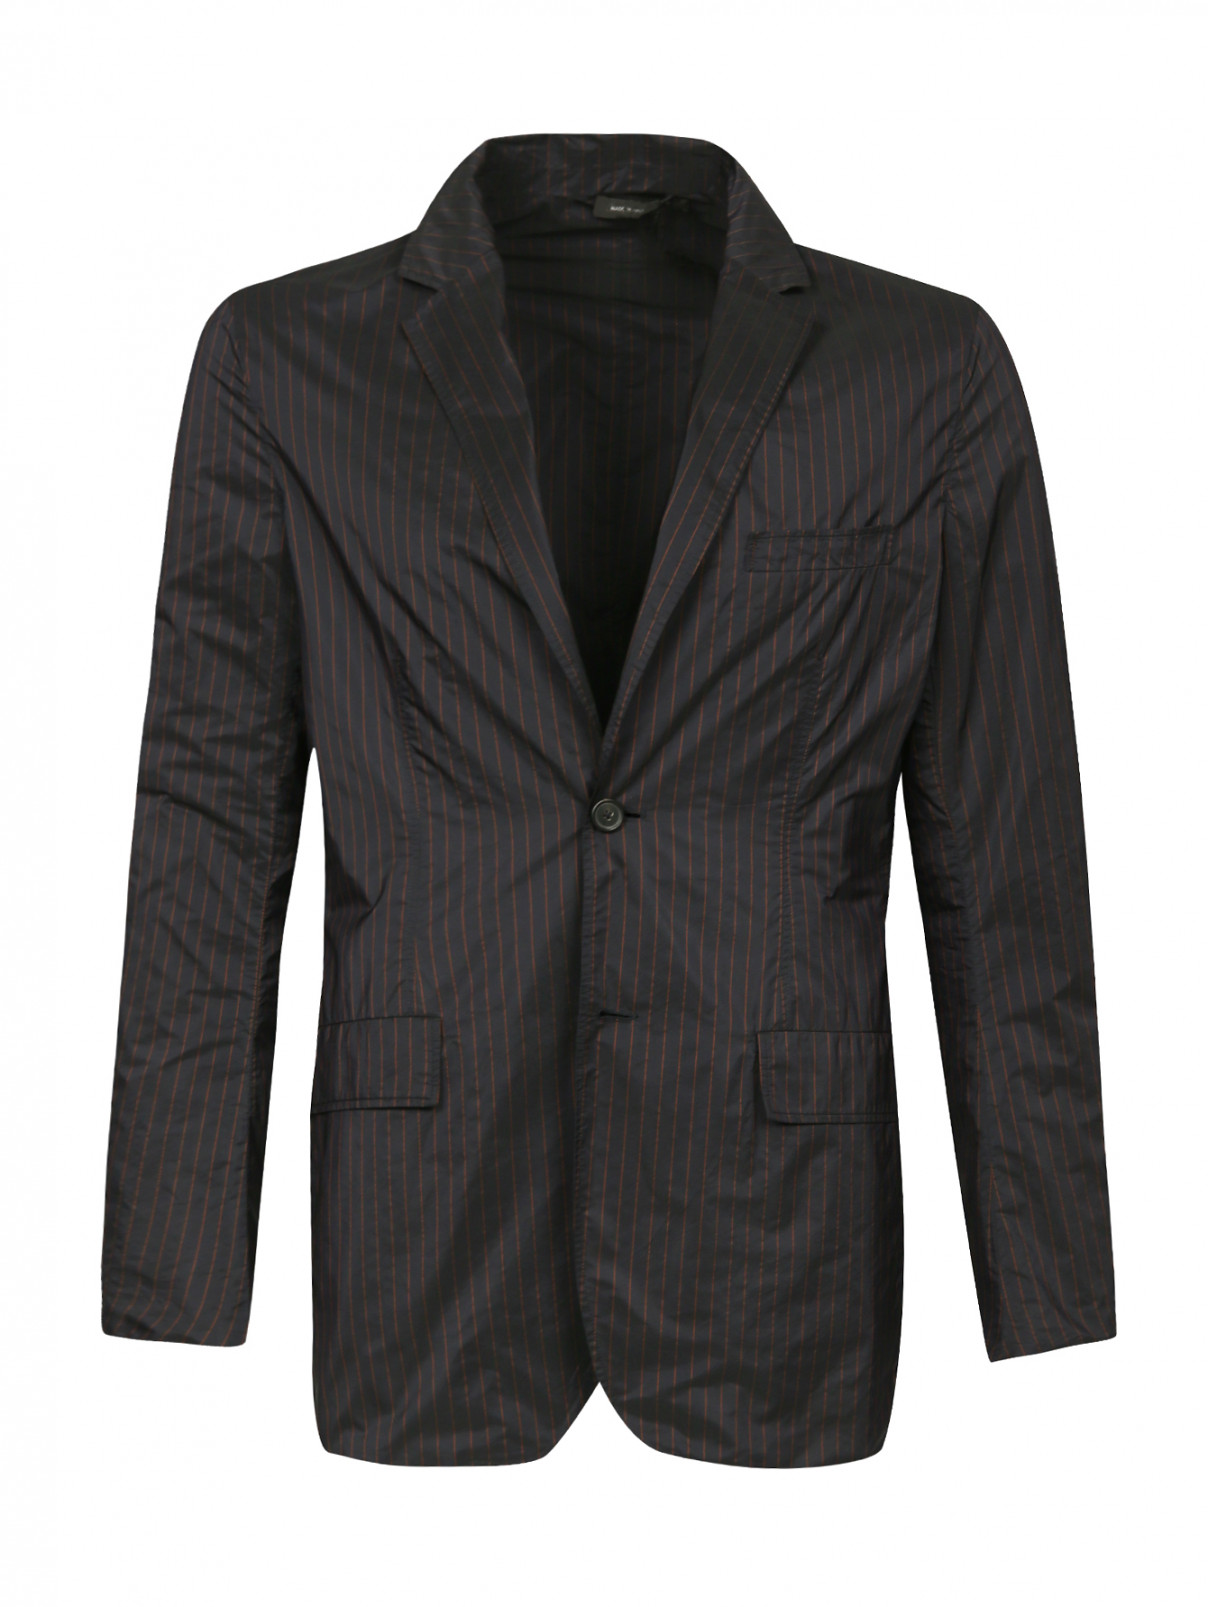 Пиджак с узором "полоска" Jil Sander  –  Общий вид  – Цвет:  Синий